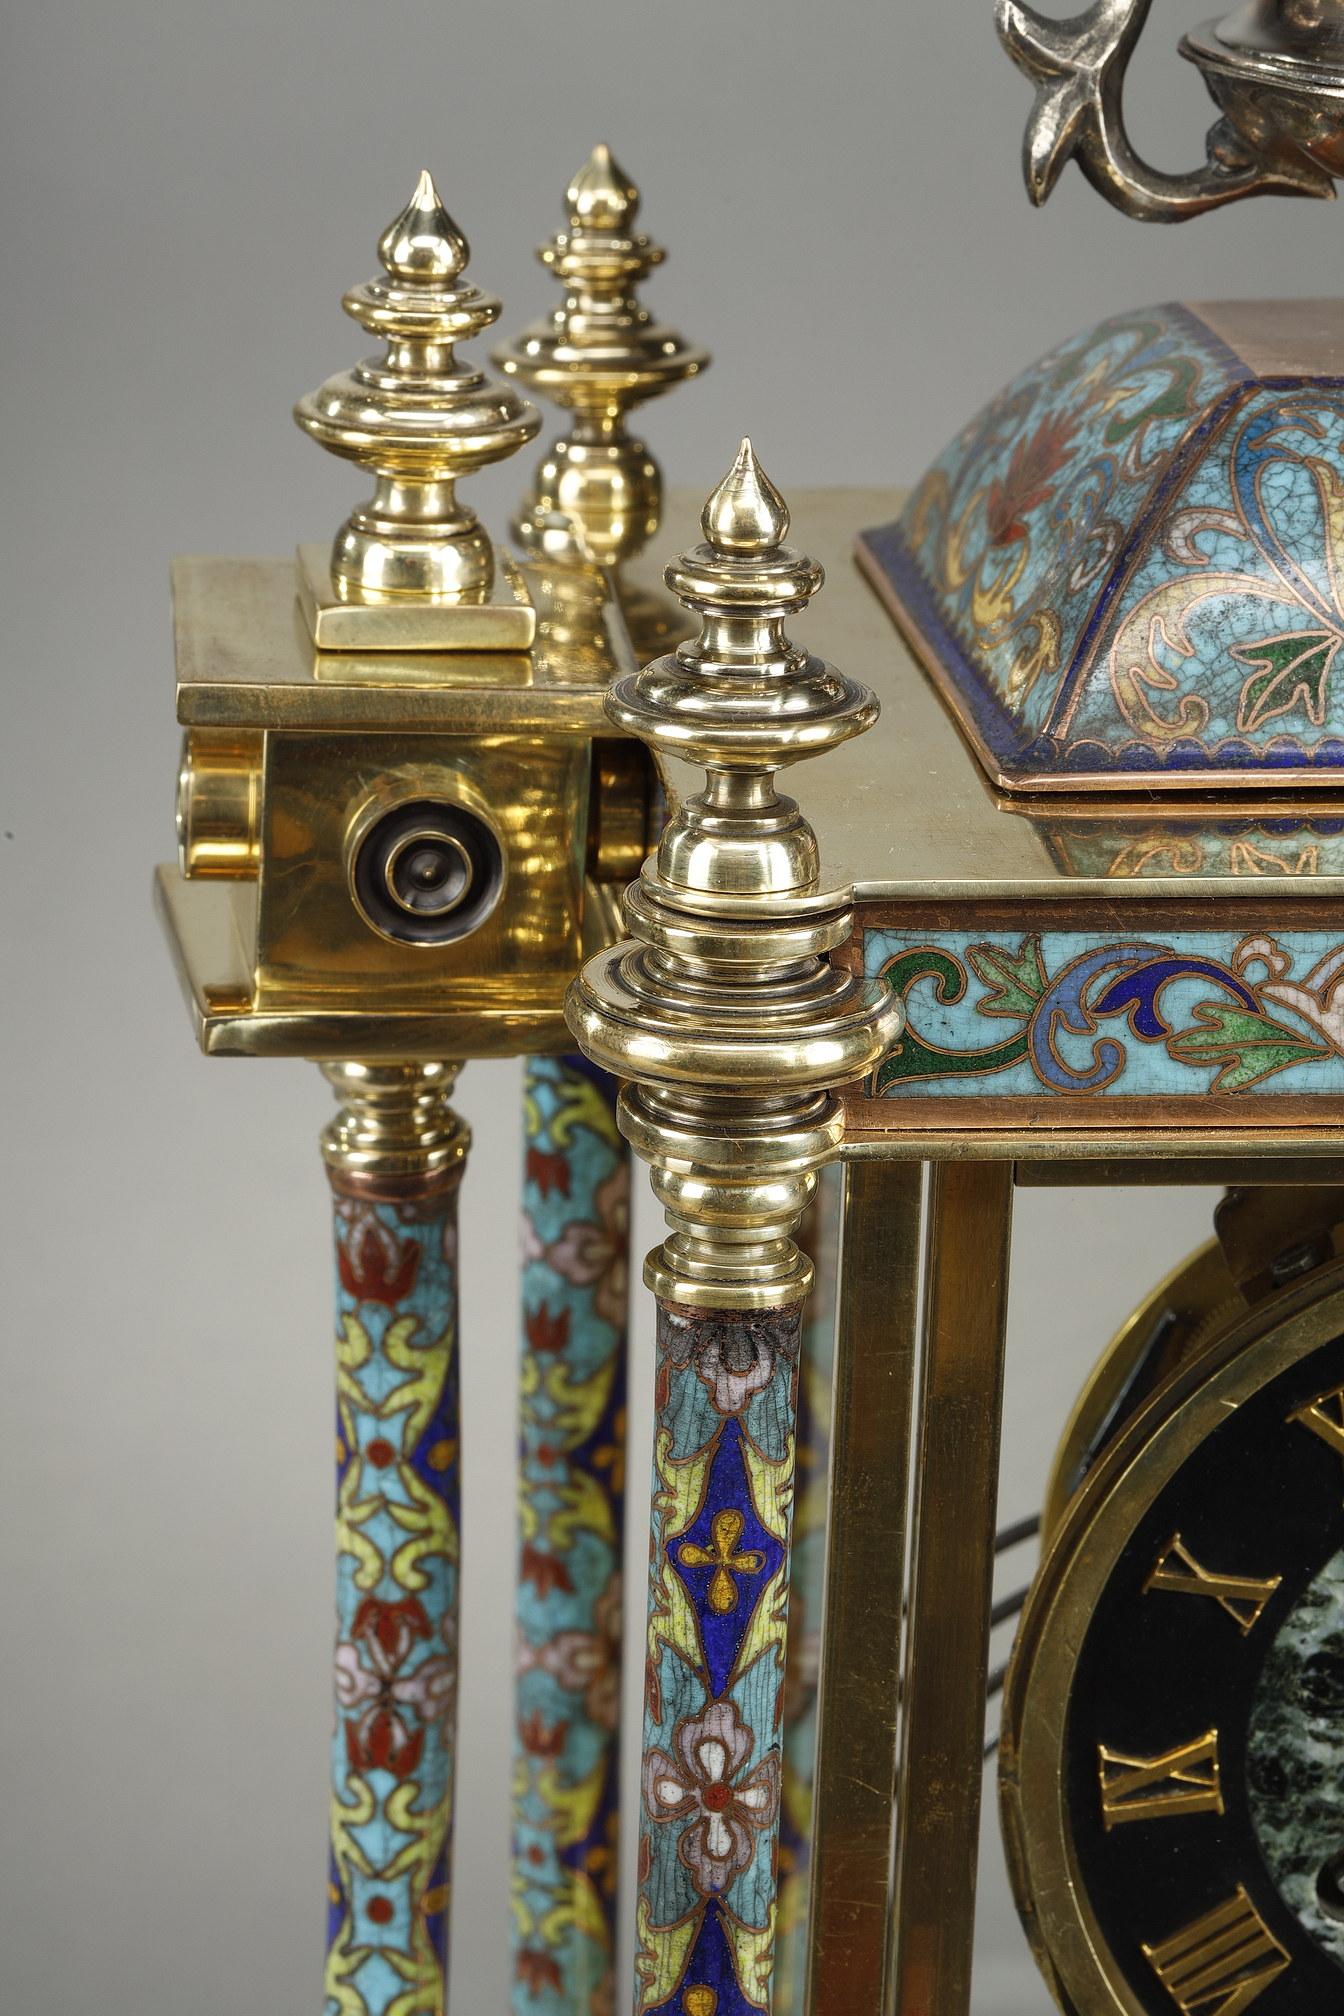 French Art Nouveau Clock with Cloisonné Enamel Decoration in the Oriental Style